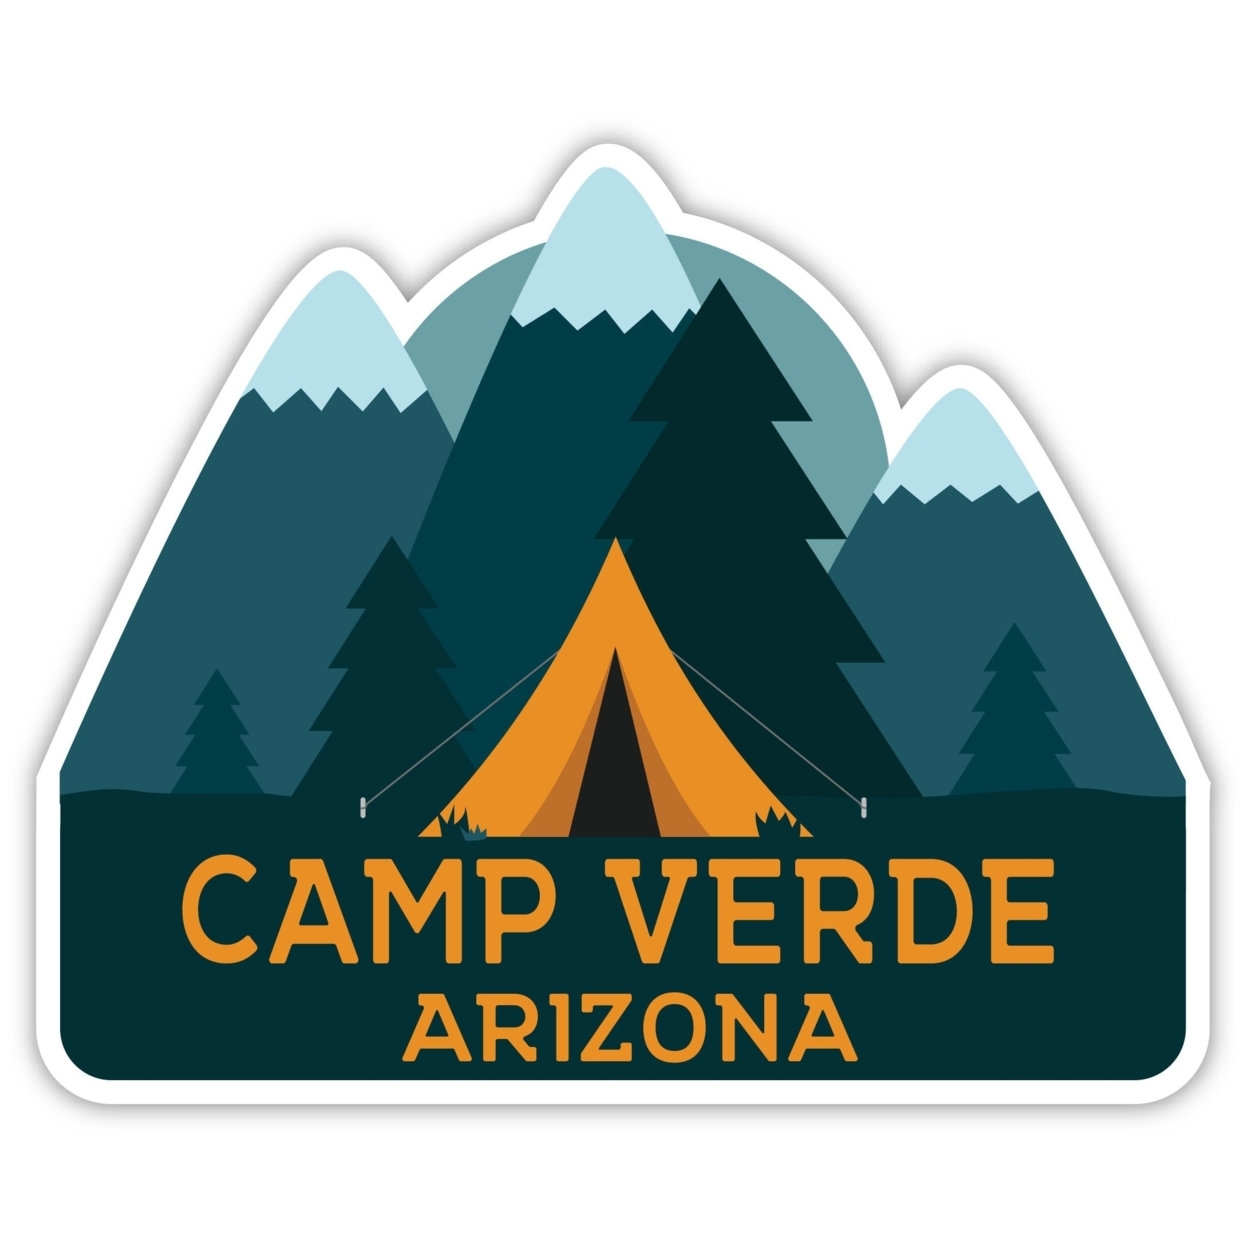 Camp Verde Arizona Souvenir Decorative Stickers (Choose Theme And Size) - 4-Pack, 8-Inch, Tent